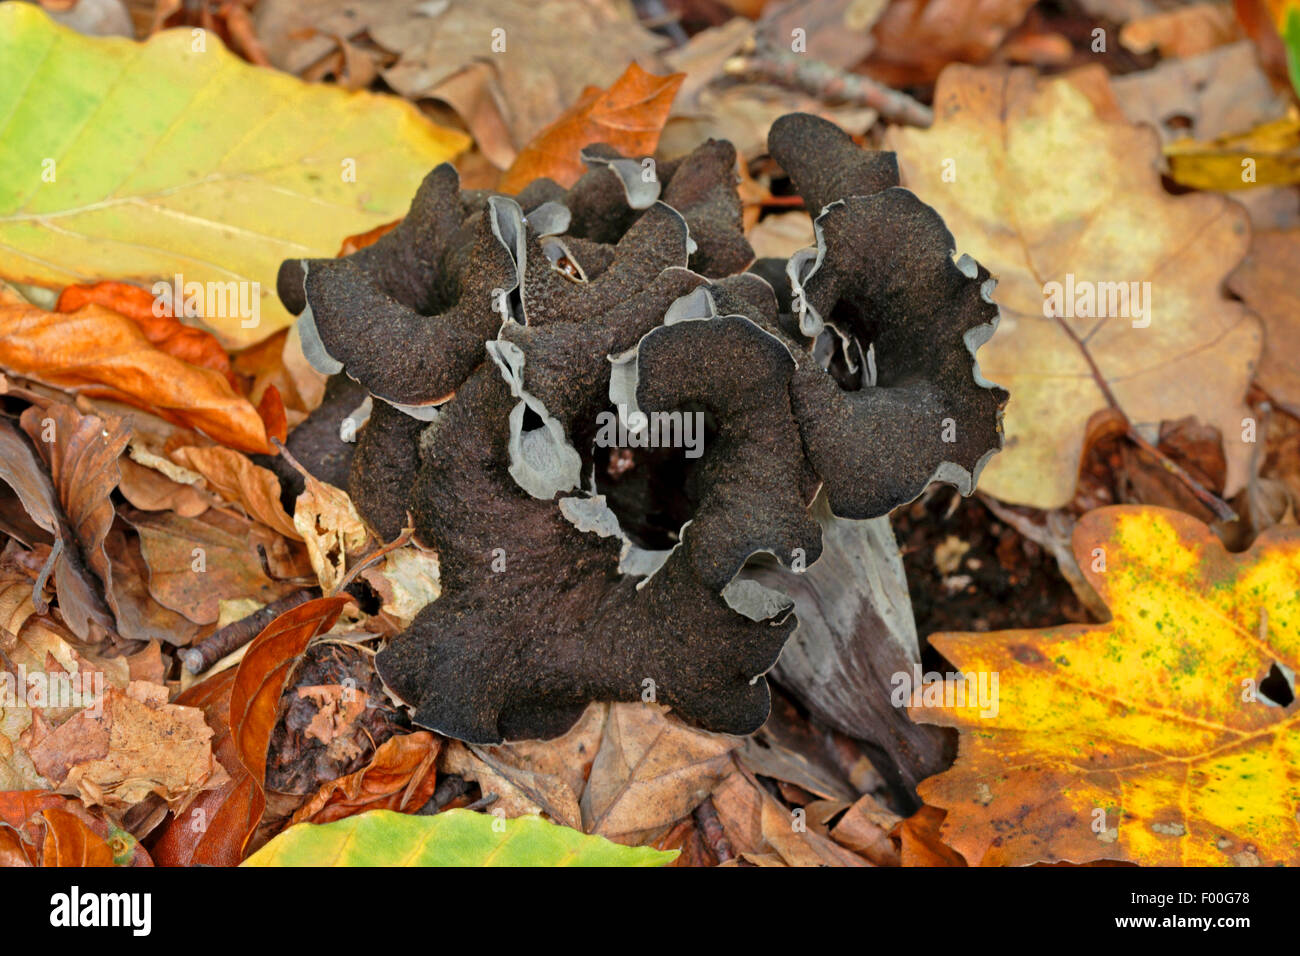 Horn of plenty, Black Trumpet, Black chanterelle (Craterellus cornucopioides, Cantharellus cornucopioides, Craterella cornucopioides), single fruiting body on forest floor, Germany Stock Photo